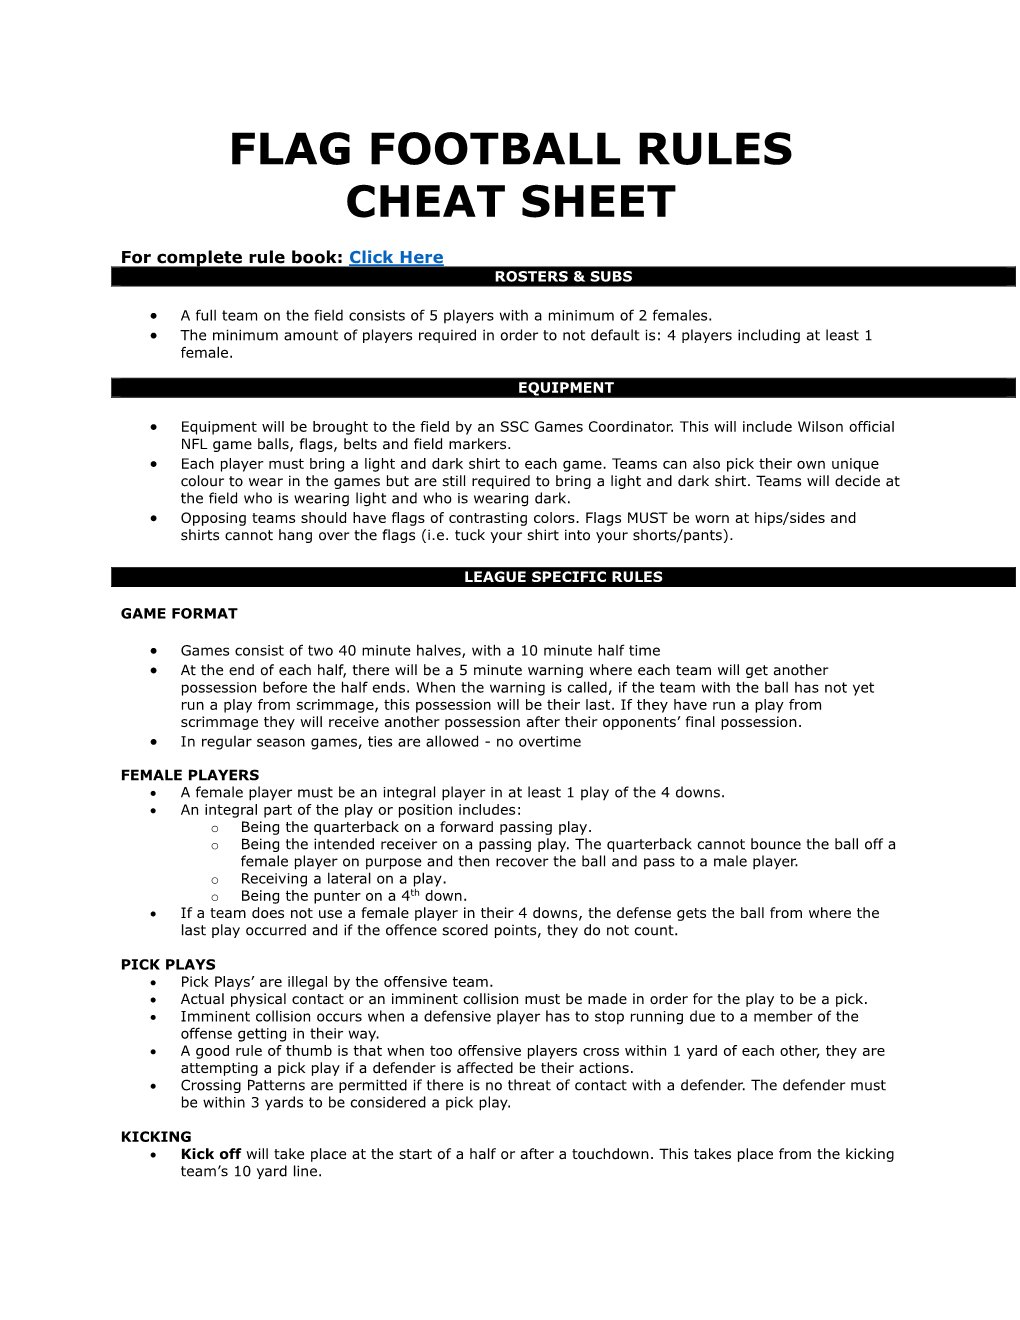 Flag Football Rules Cheat Sheet